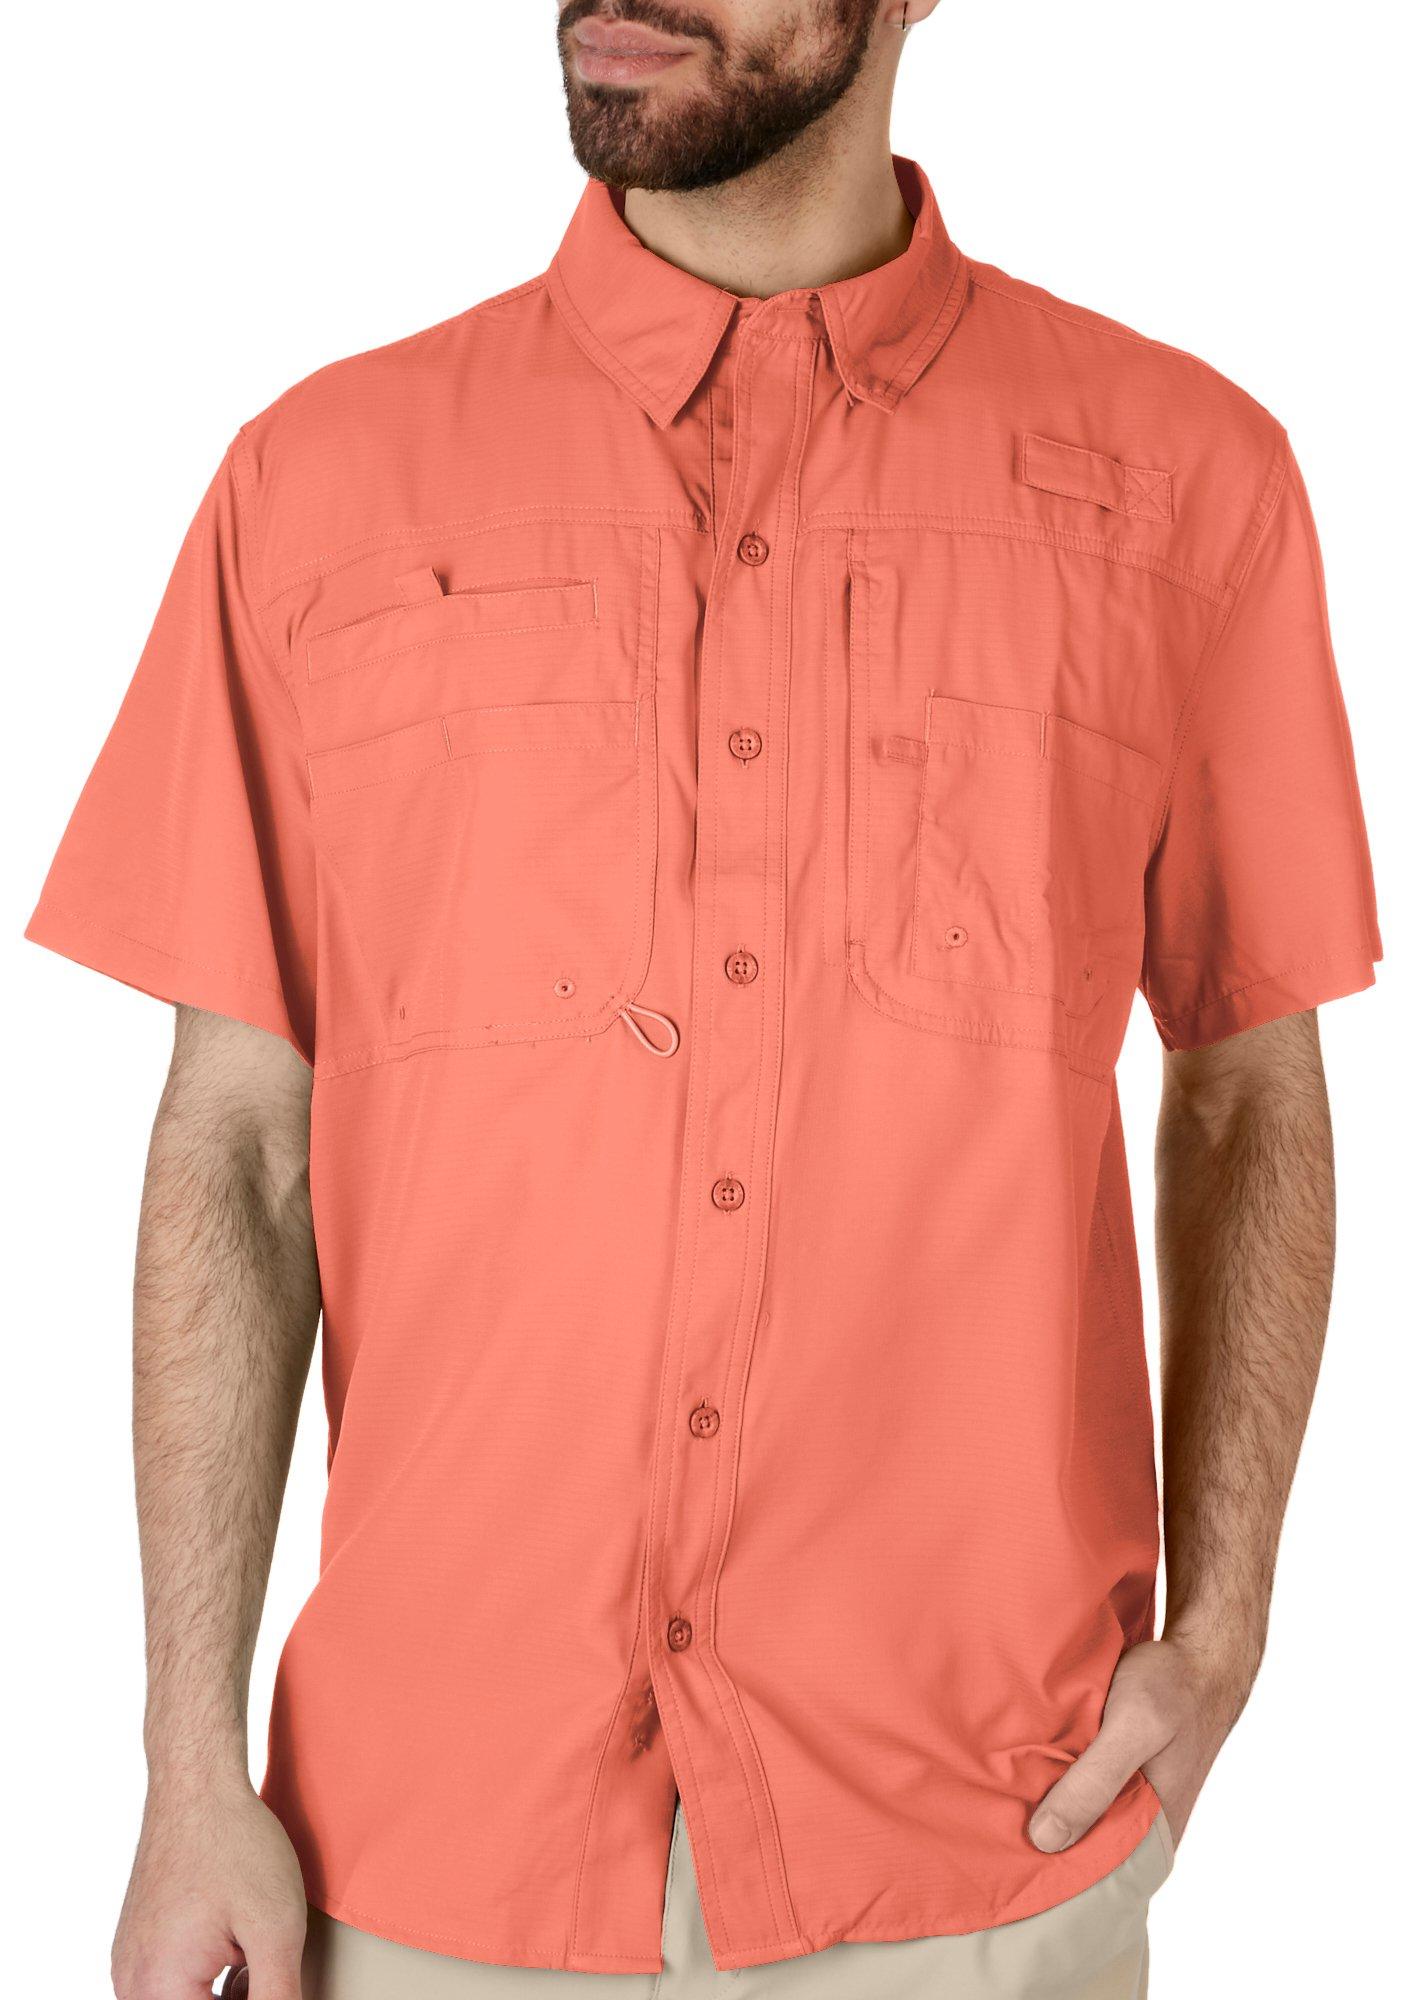 Adult Reel Legends Large Button Shirt Cotton Vented Short Sleeve Plaid  Mens.